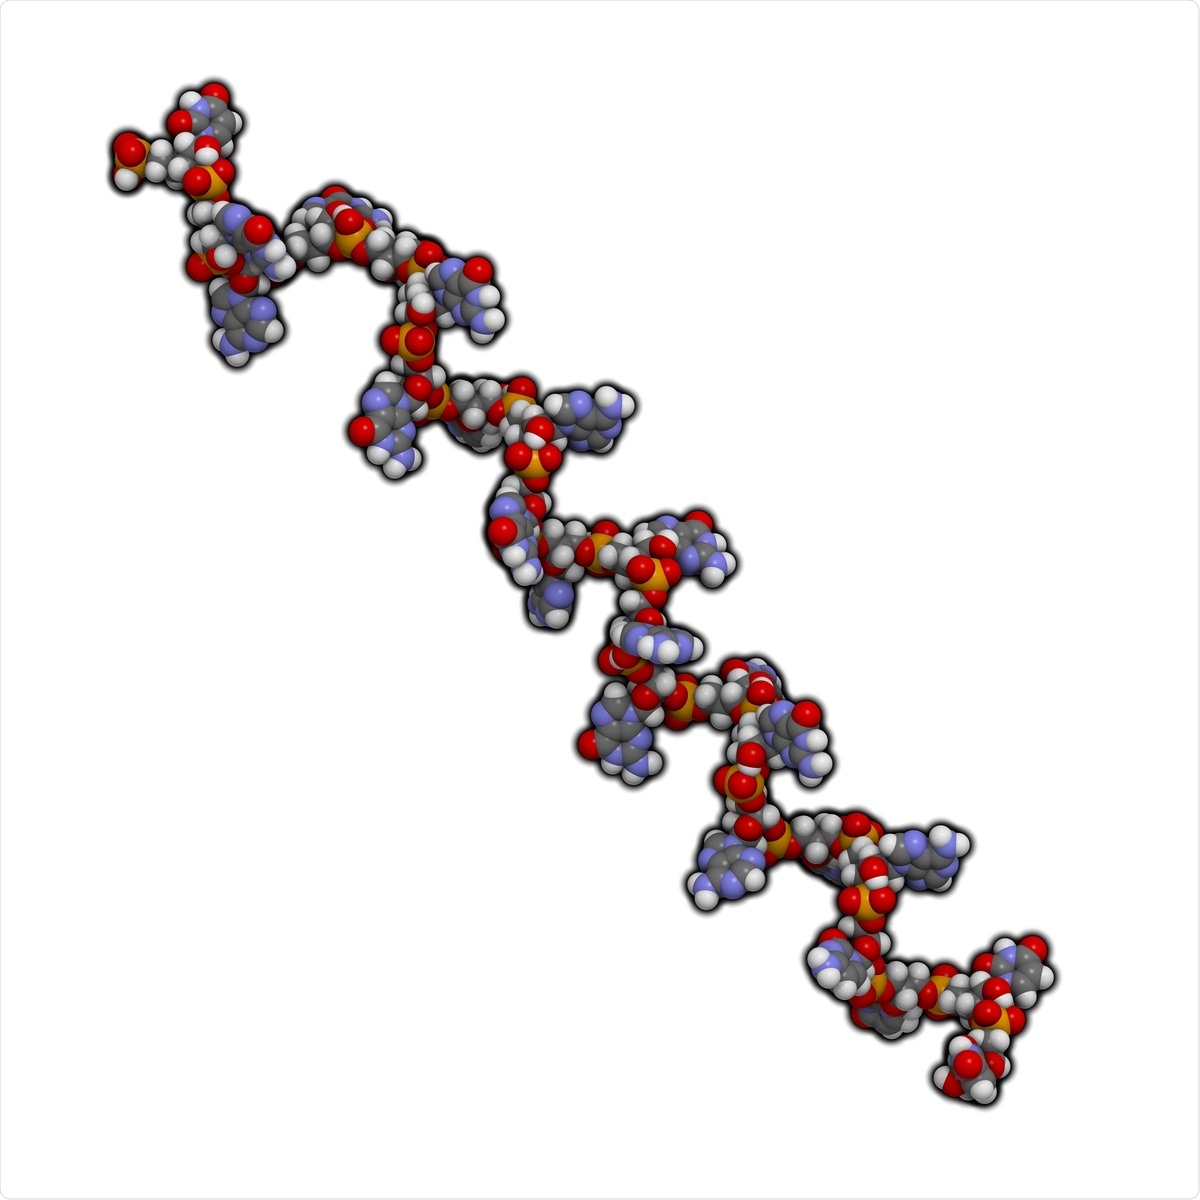 MicroRNA (miRNA) molecule. Image Credit: StudioMolekuul / Shutterstock